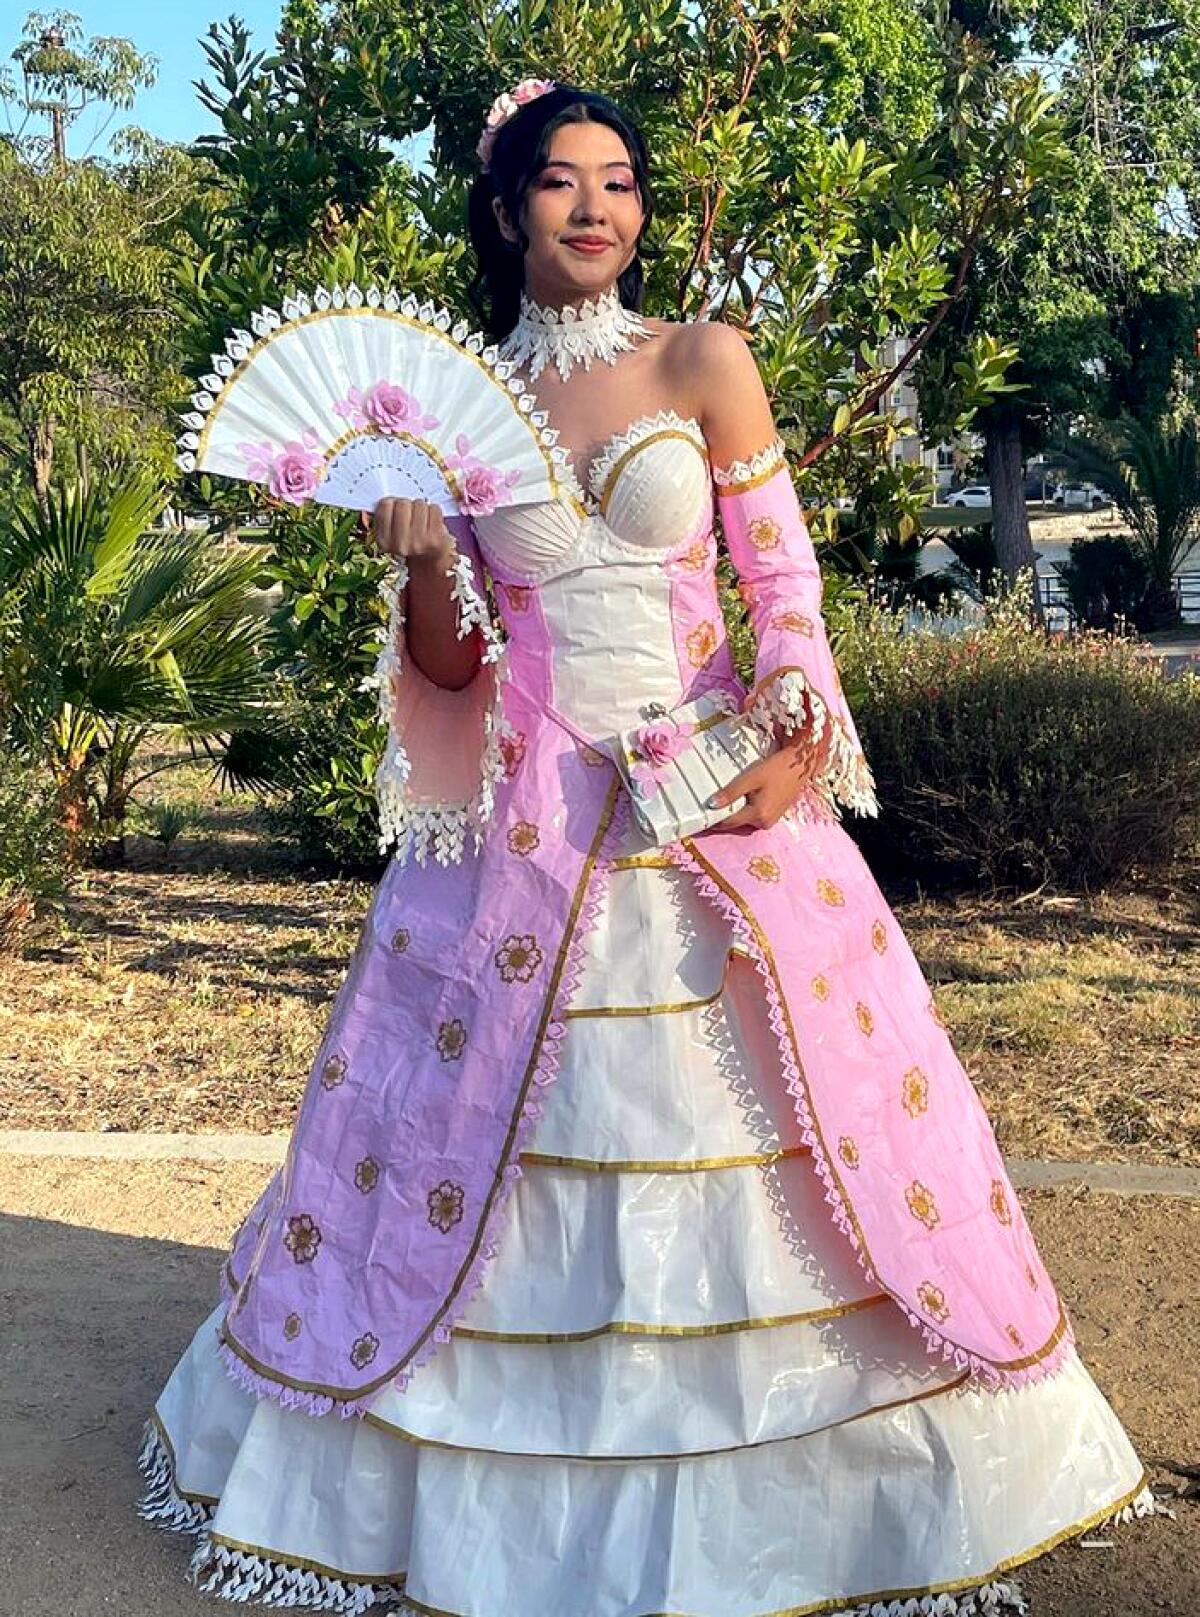 Dressing Marie Antoinette: costume designers behind the lavish new